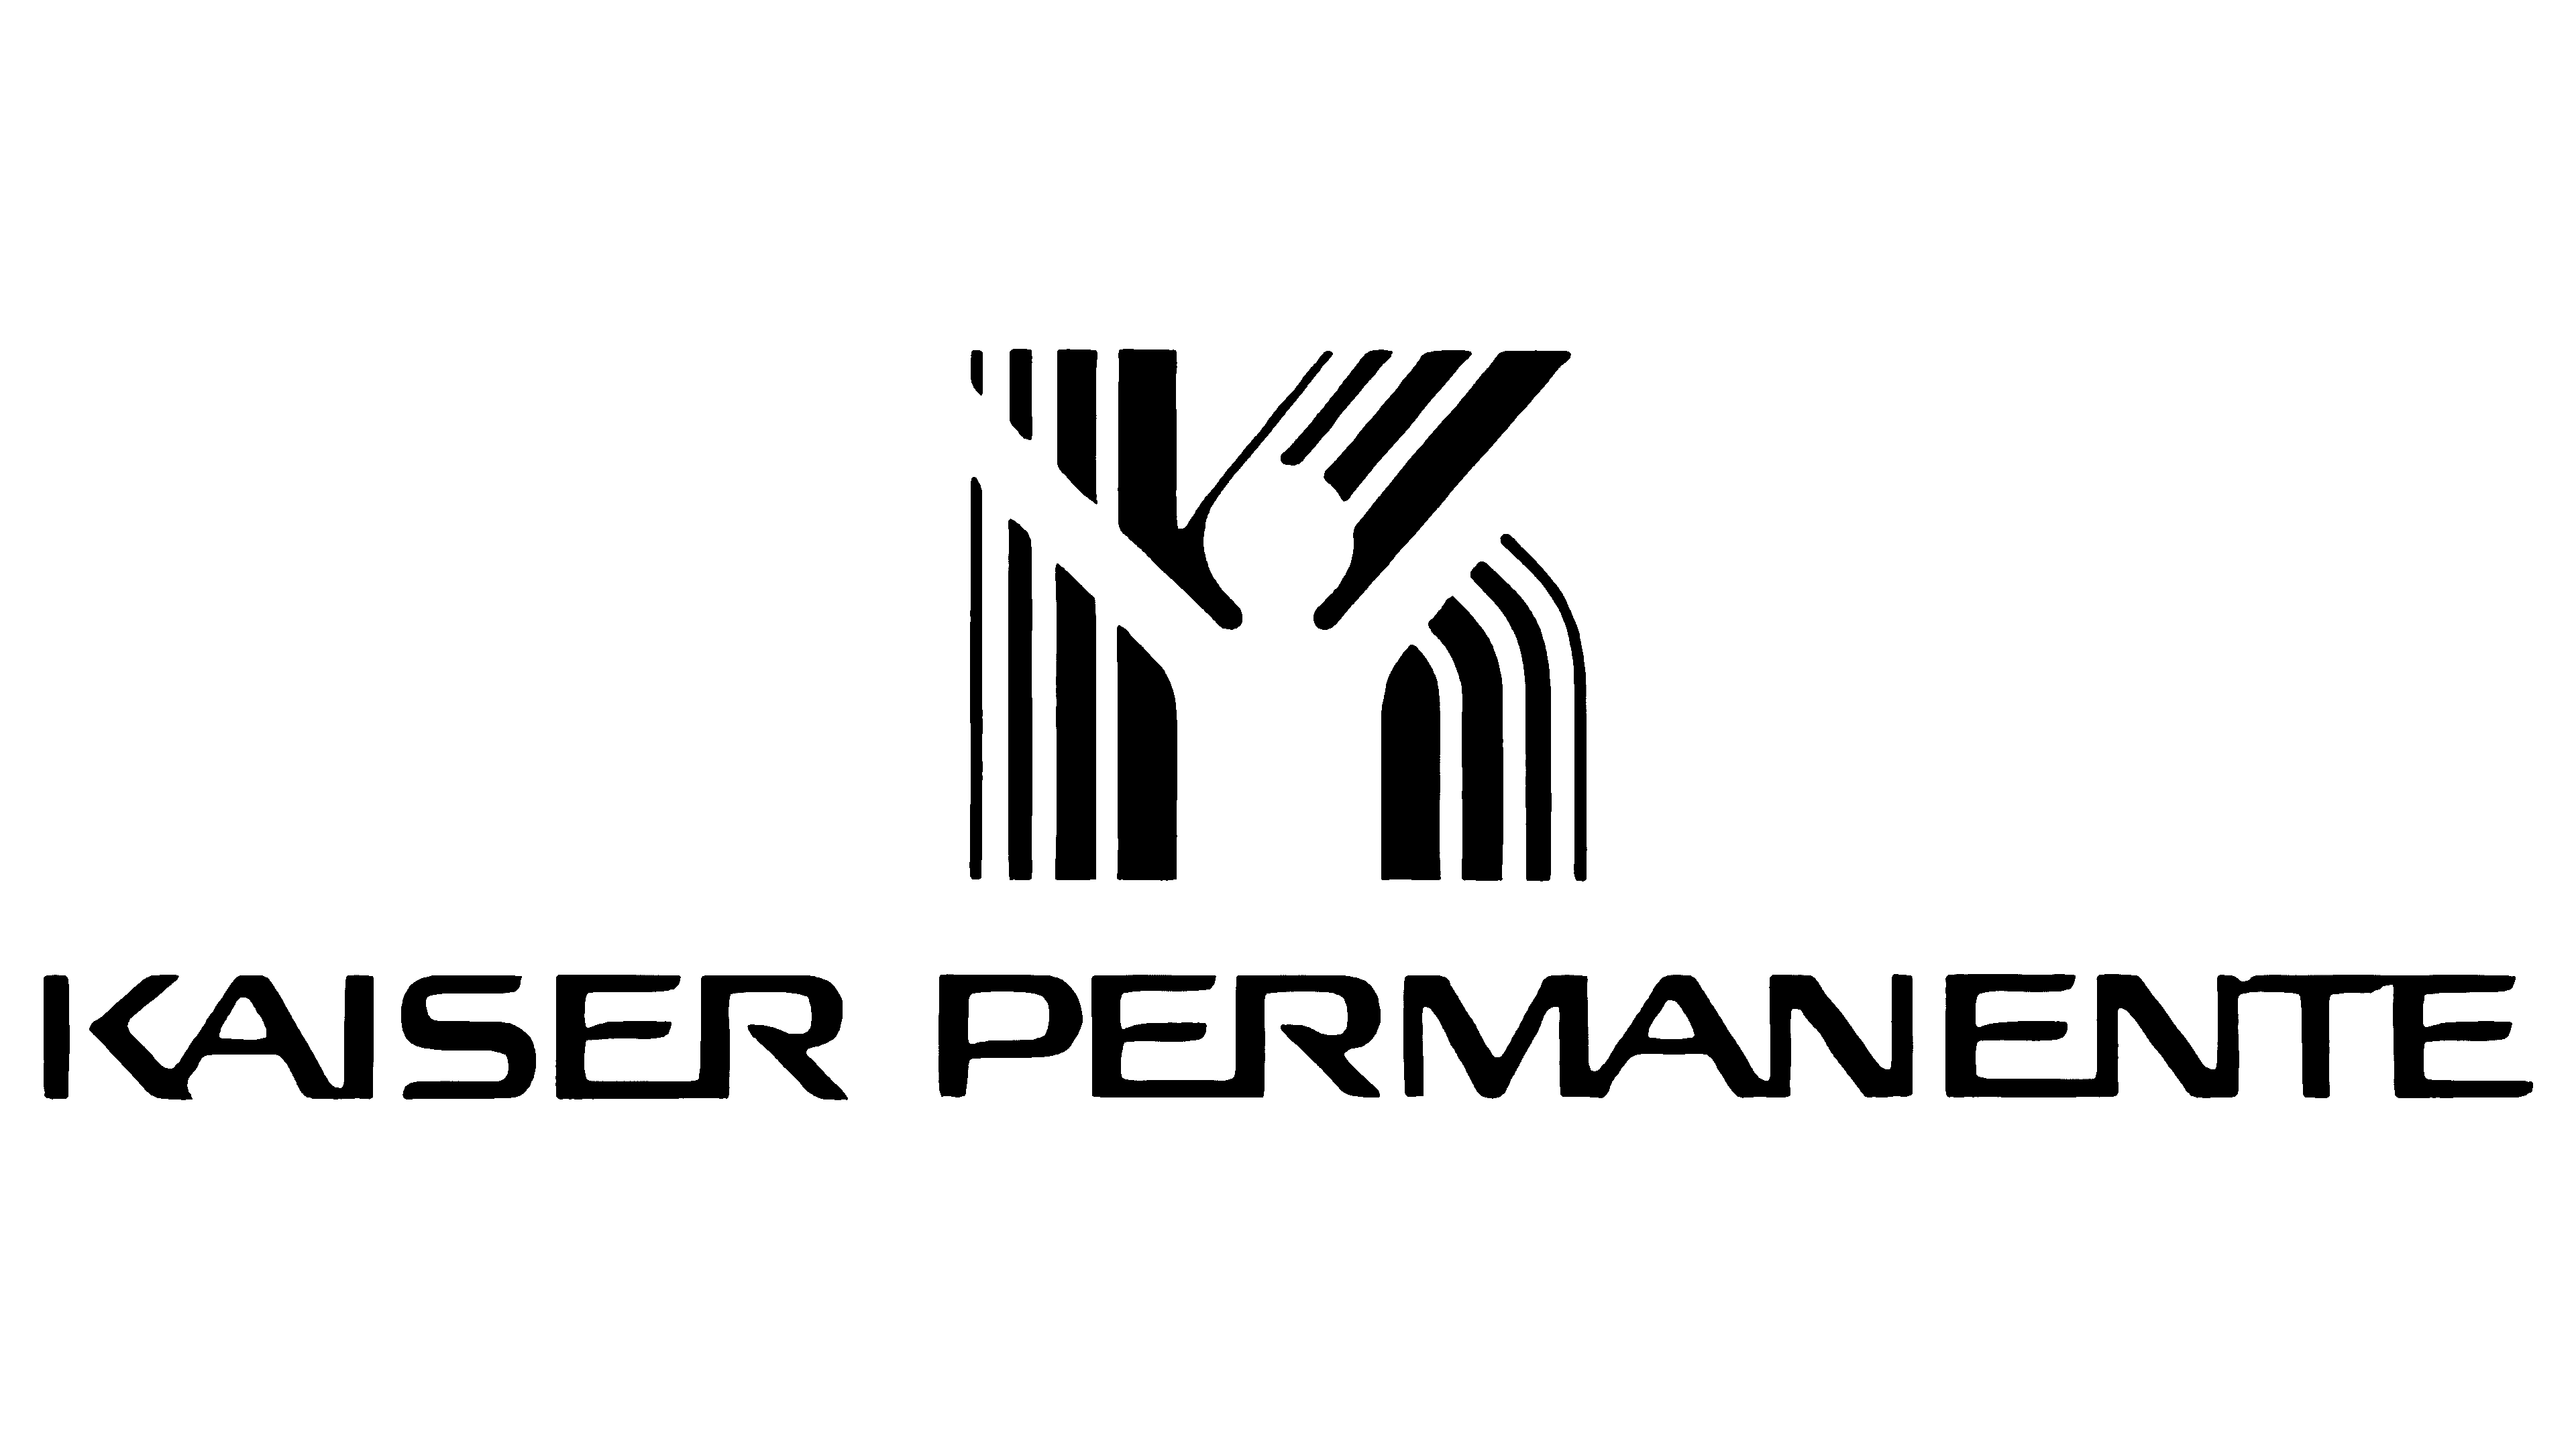 Discover more than 70 kaiser permanente logo latest - ceg.edu.vn